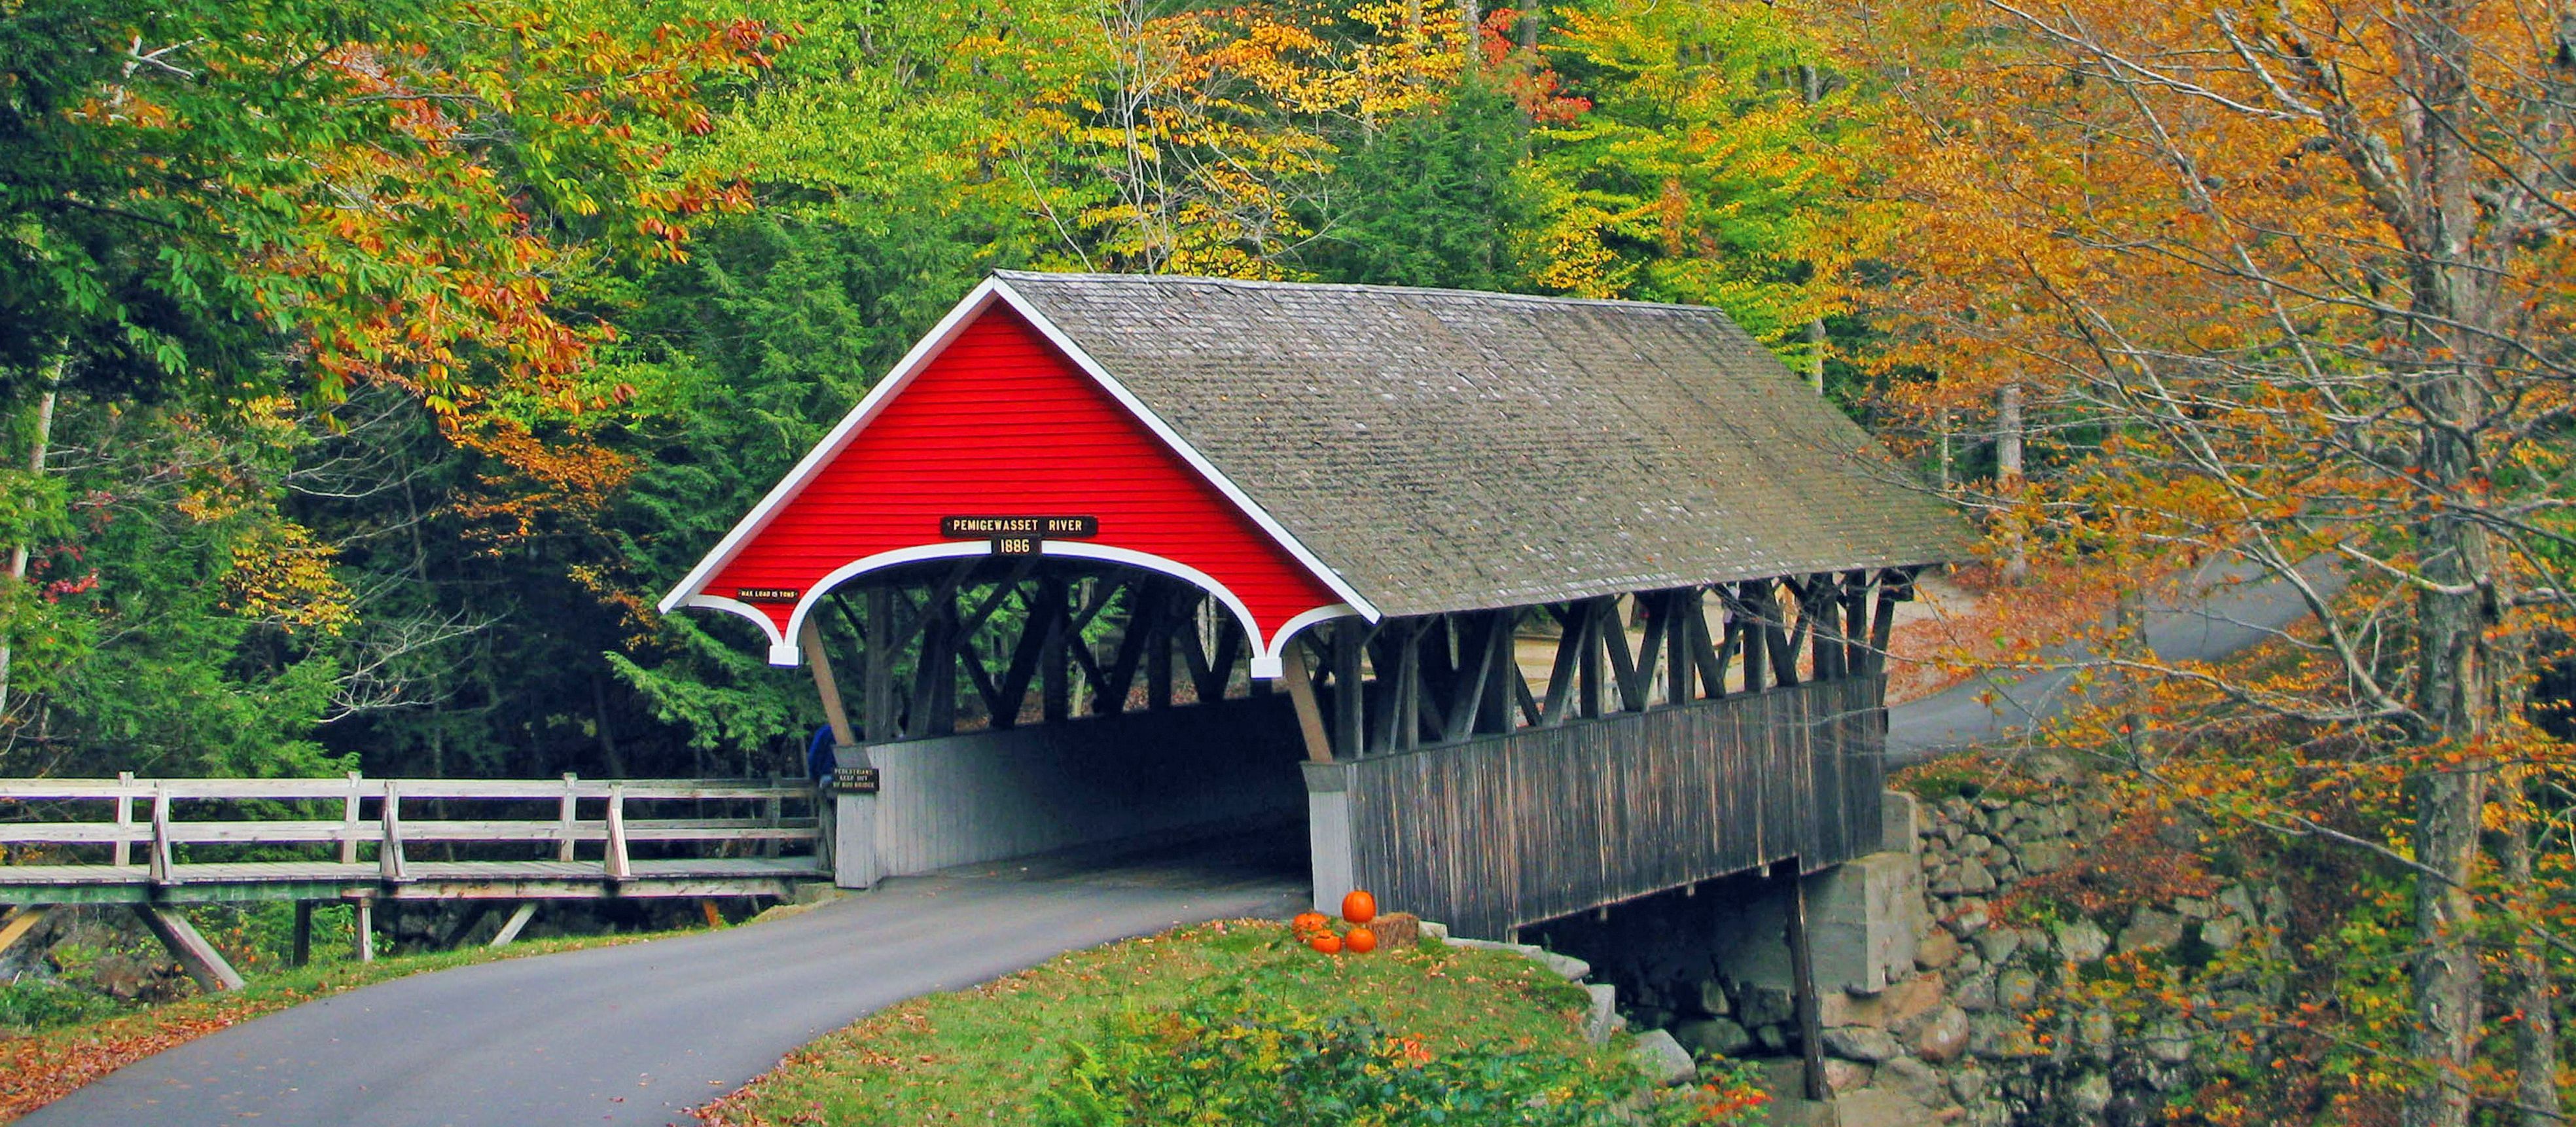 Covered Bridge in New Hampshire